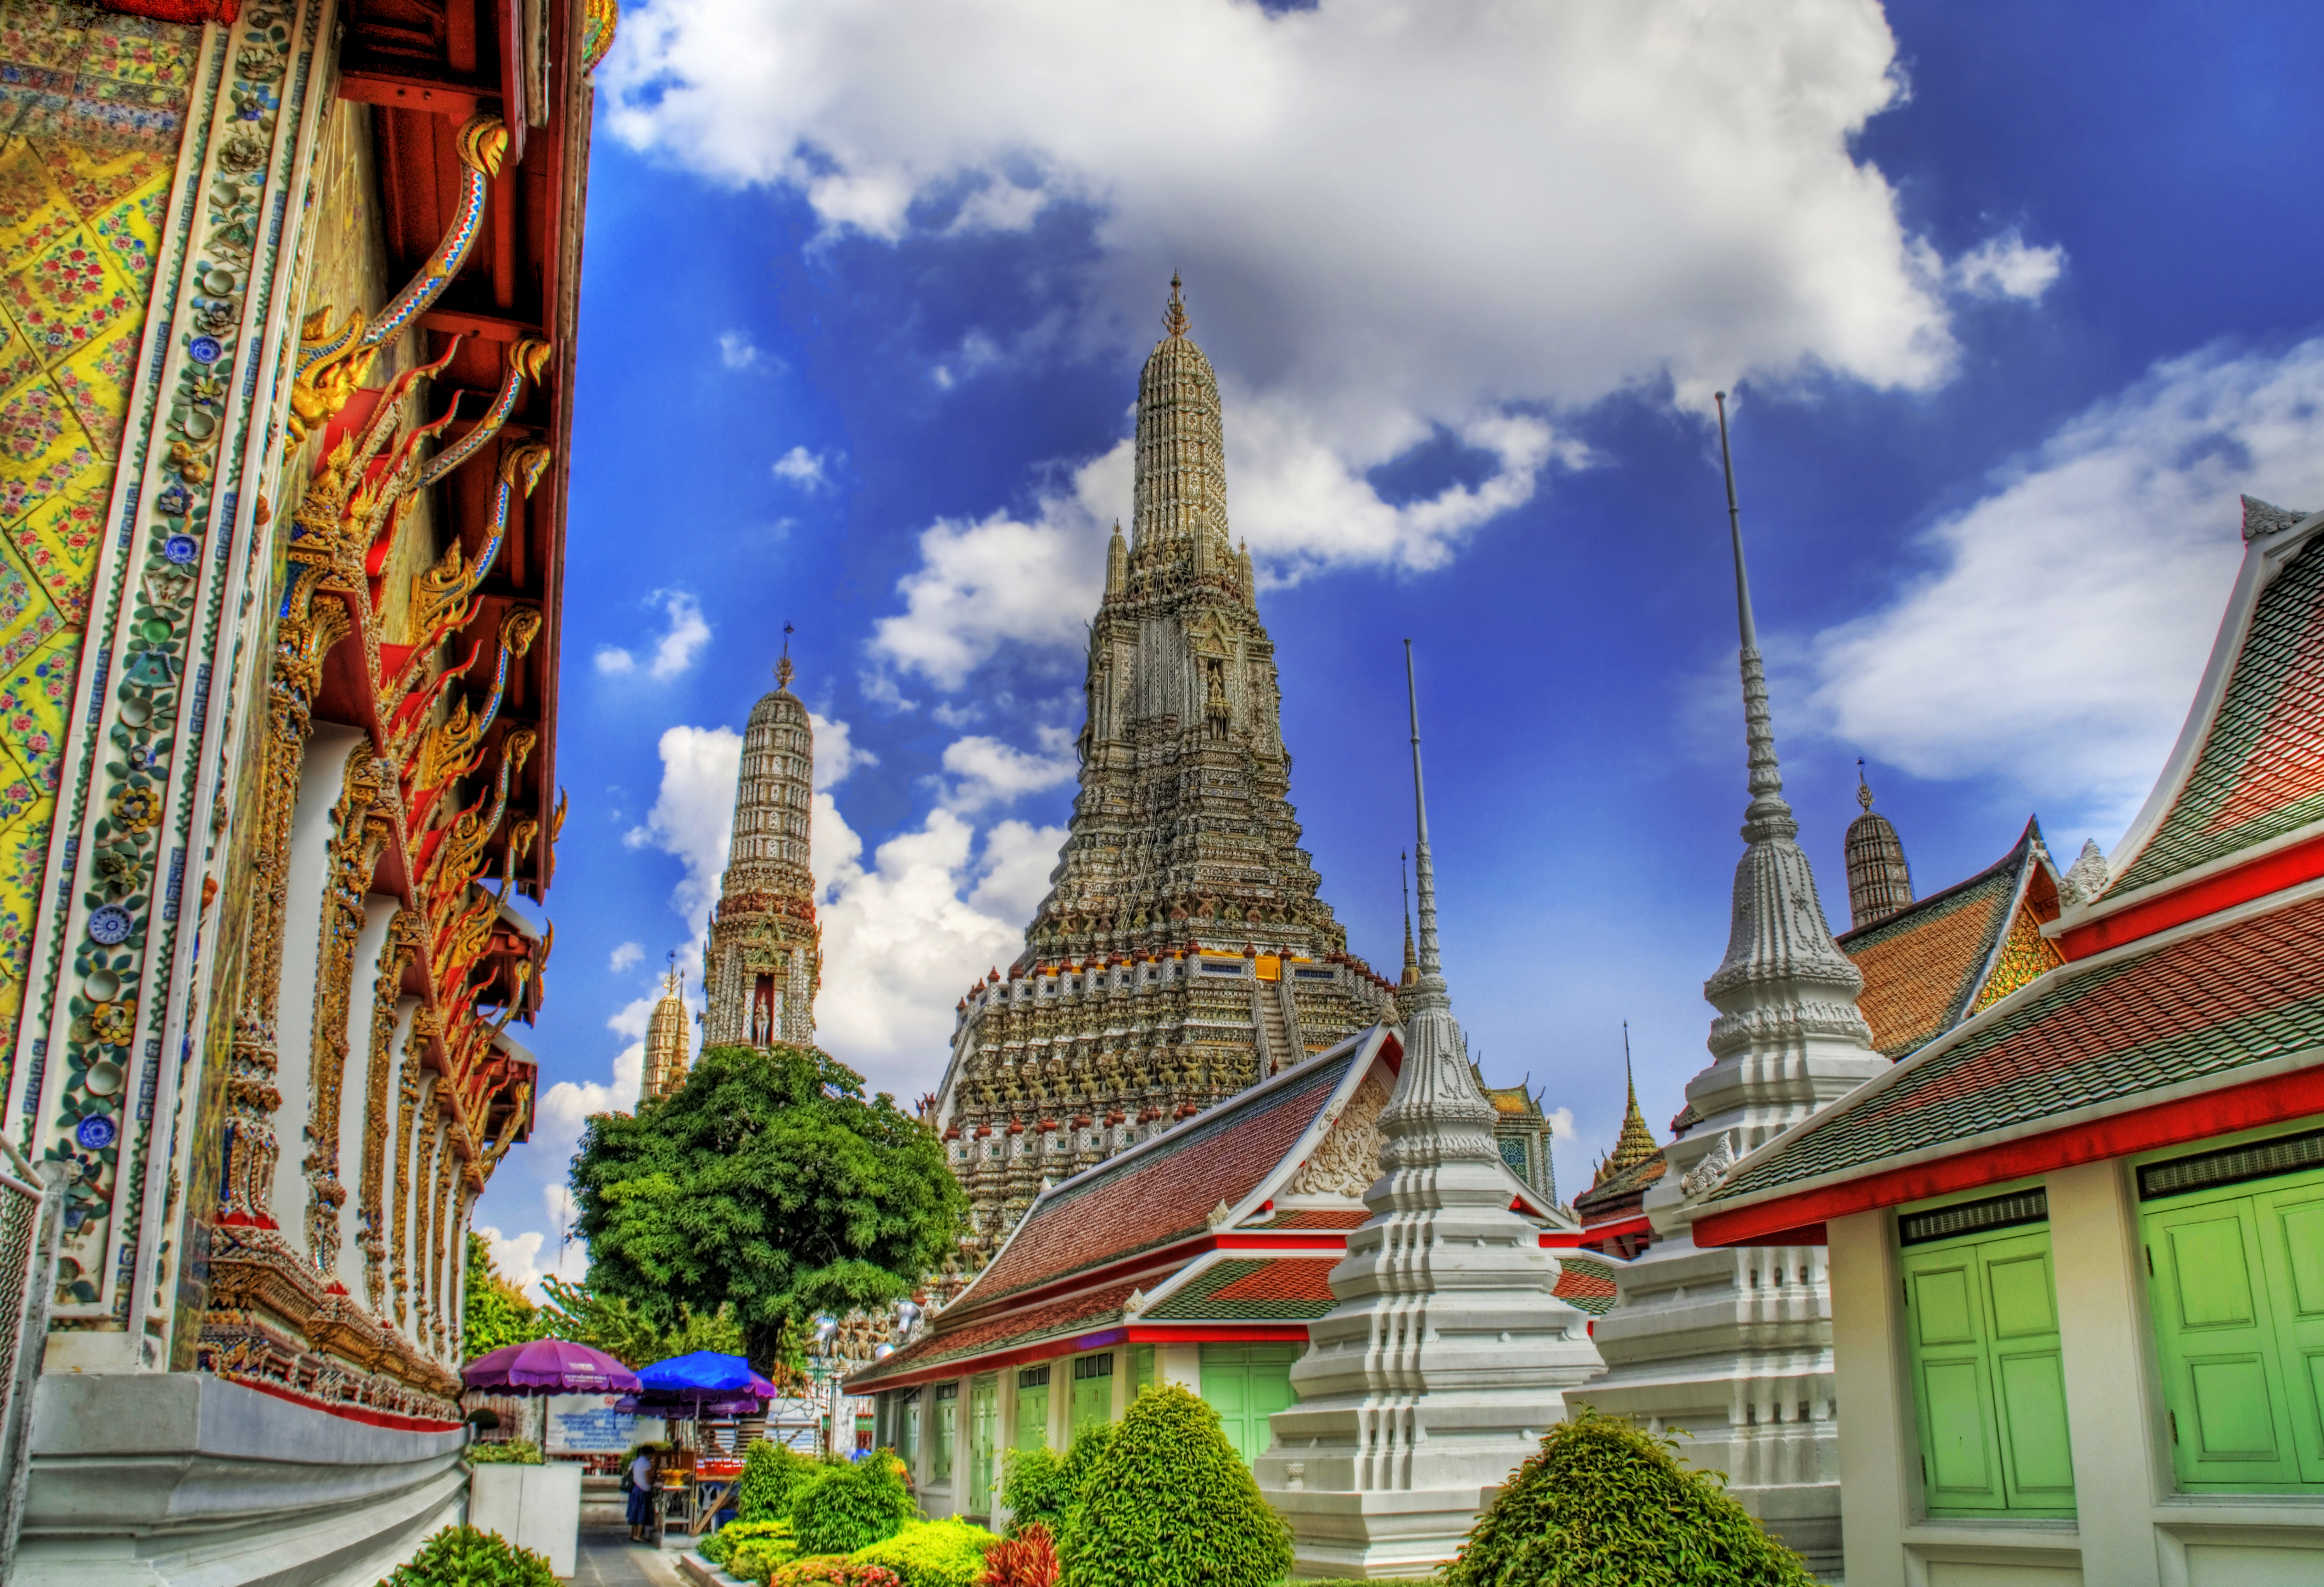 Bangkok, Thailand by Trey Ratcliff